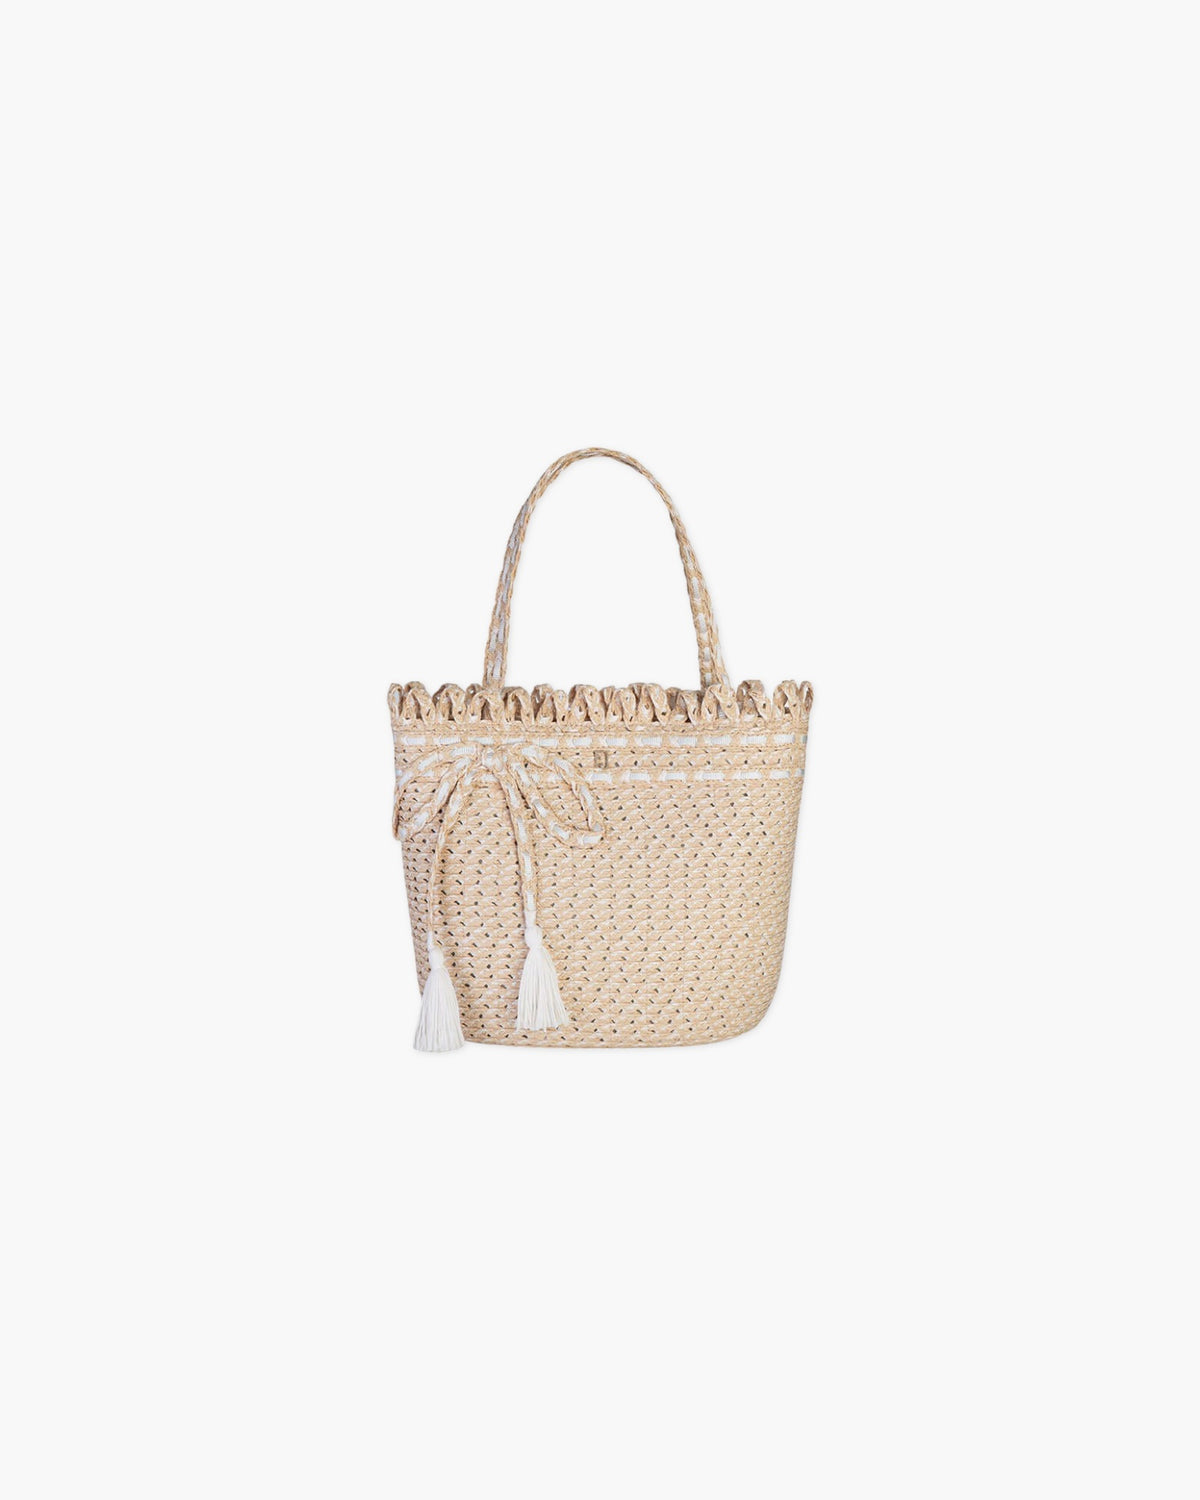 Nisa Handmade Straw Bag Travel Beach Fishing Net Handbag Shopping Woven Shoulder Bag for Women Wooden Handle White Color by BTI Engineers